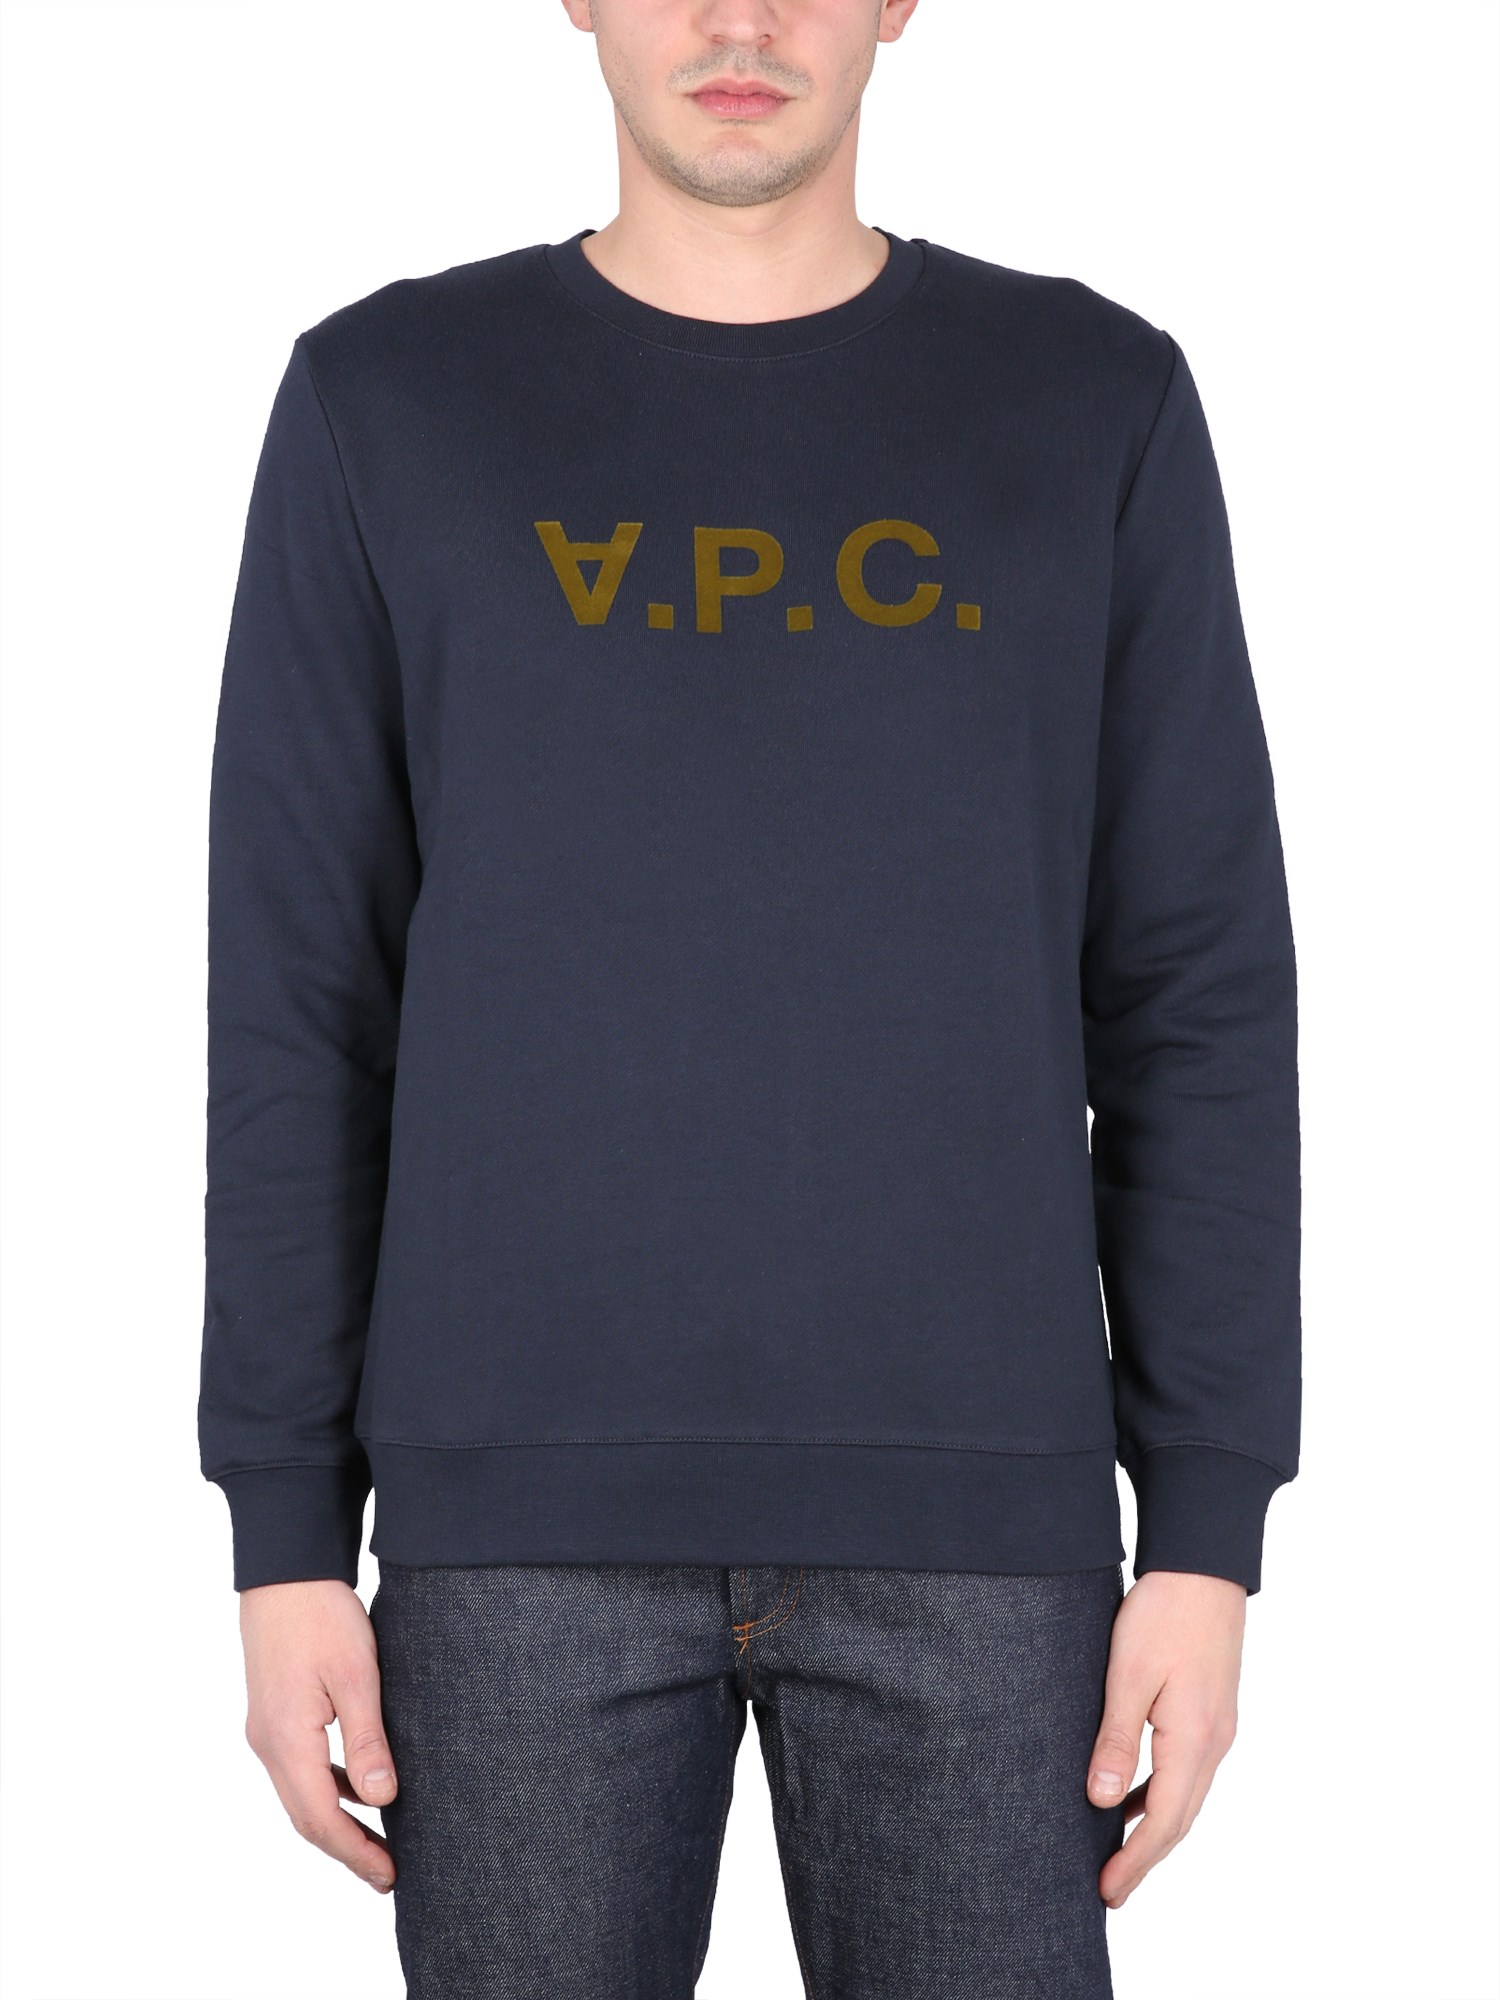 Apc Sweatshirt With V.p.c Logo In Blue